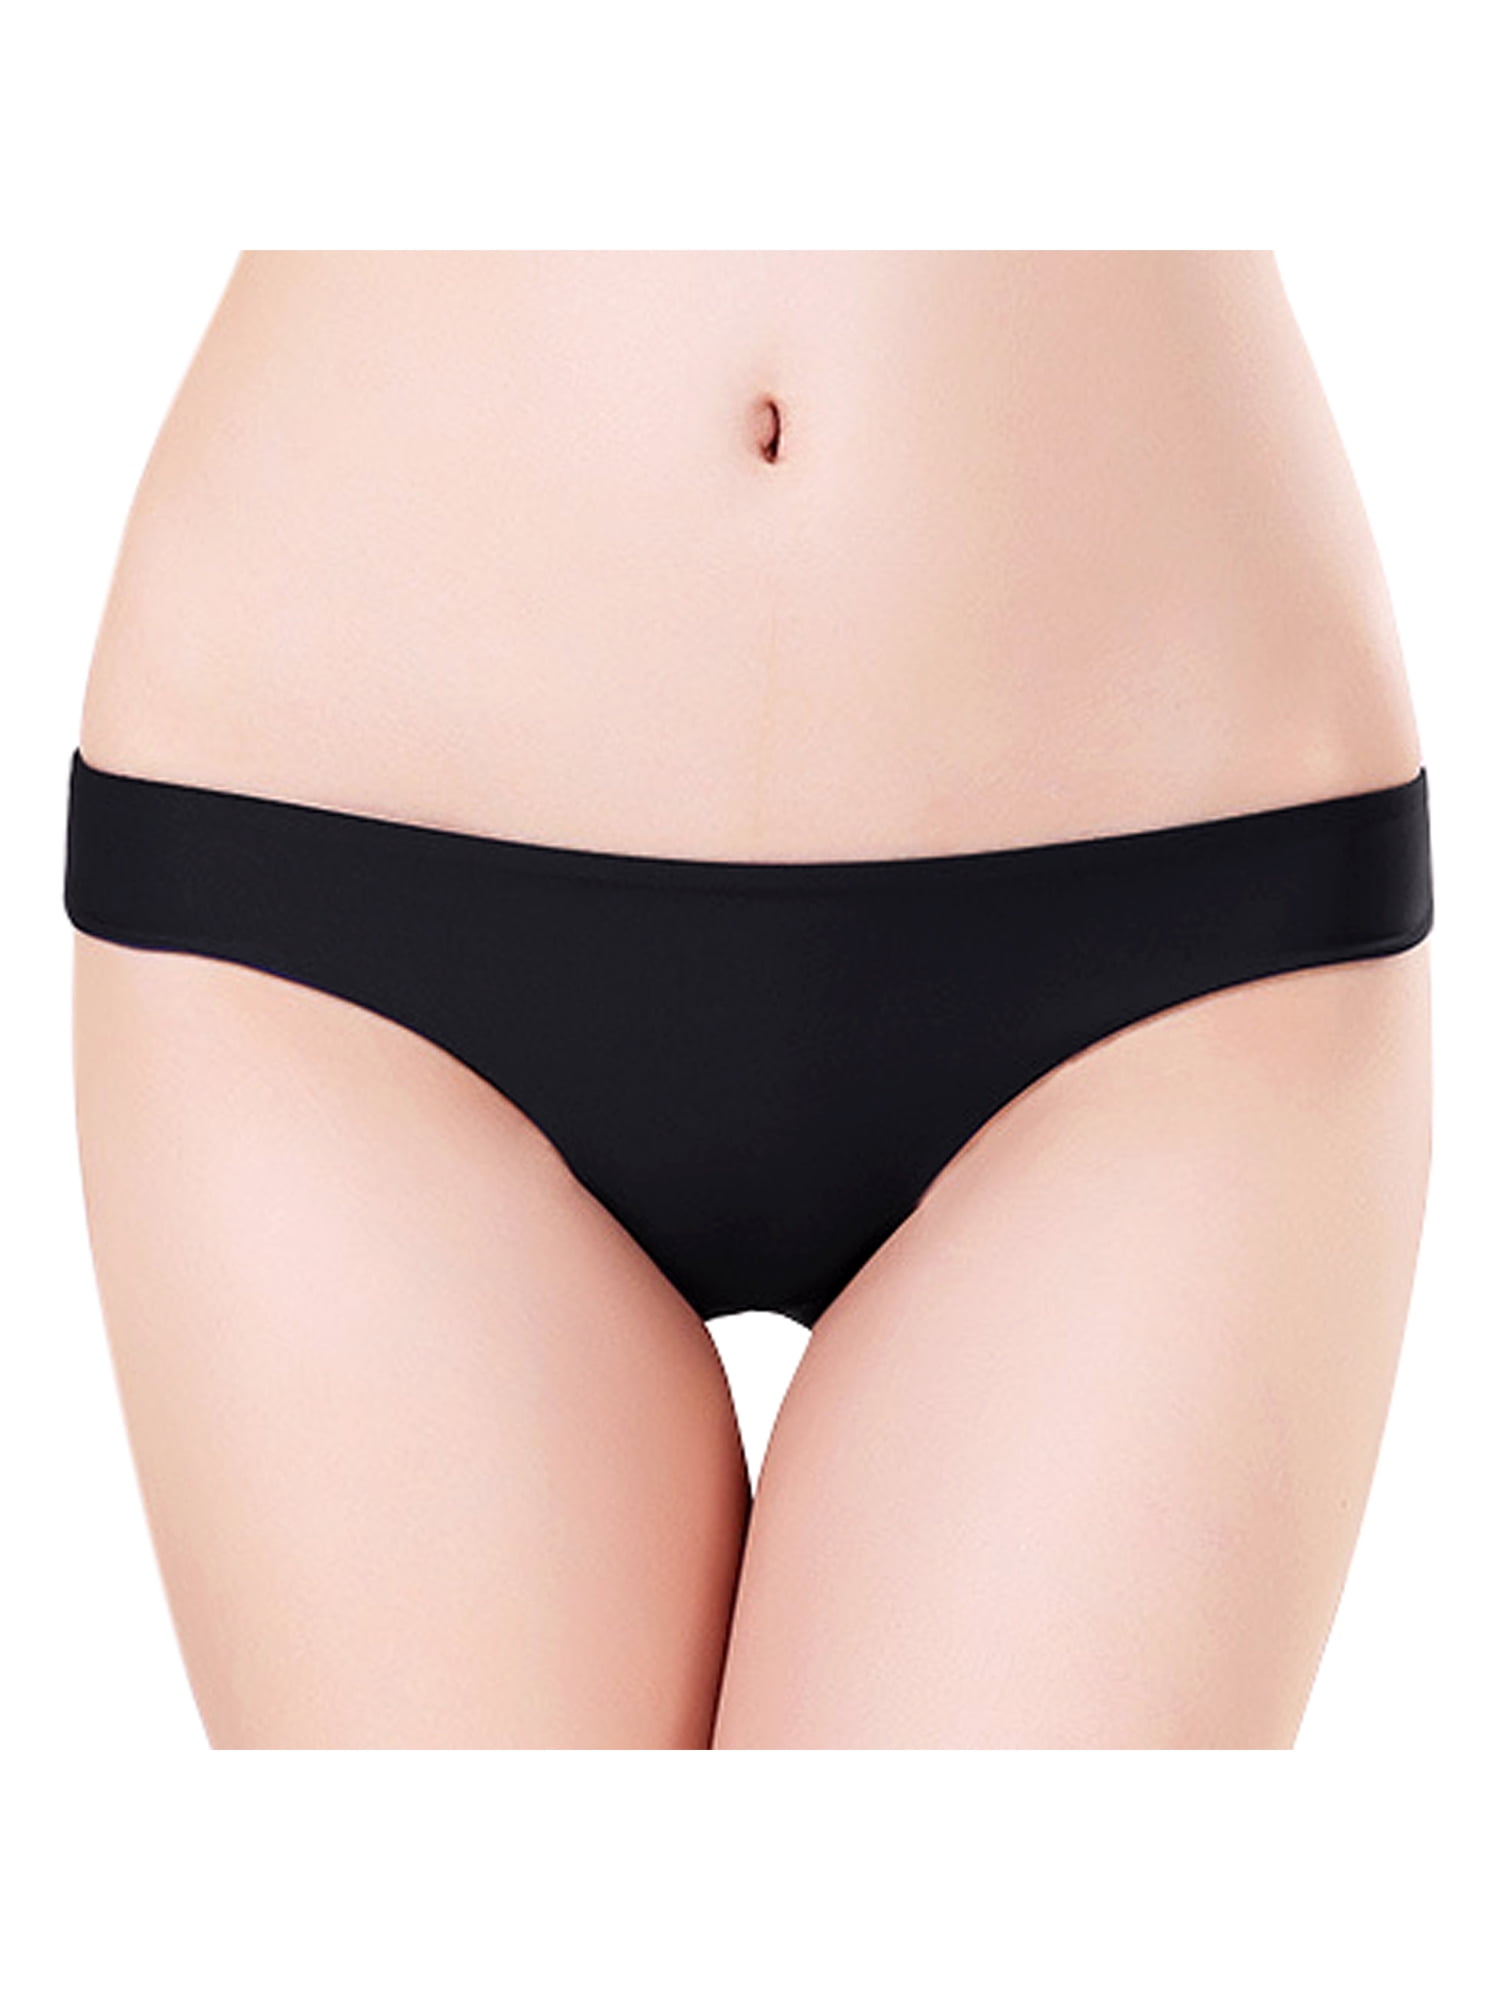 Agnes Orinda Women's Plus Size Panties Low-Rise Sexy Airy Lingerie